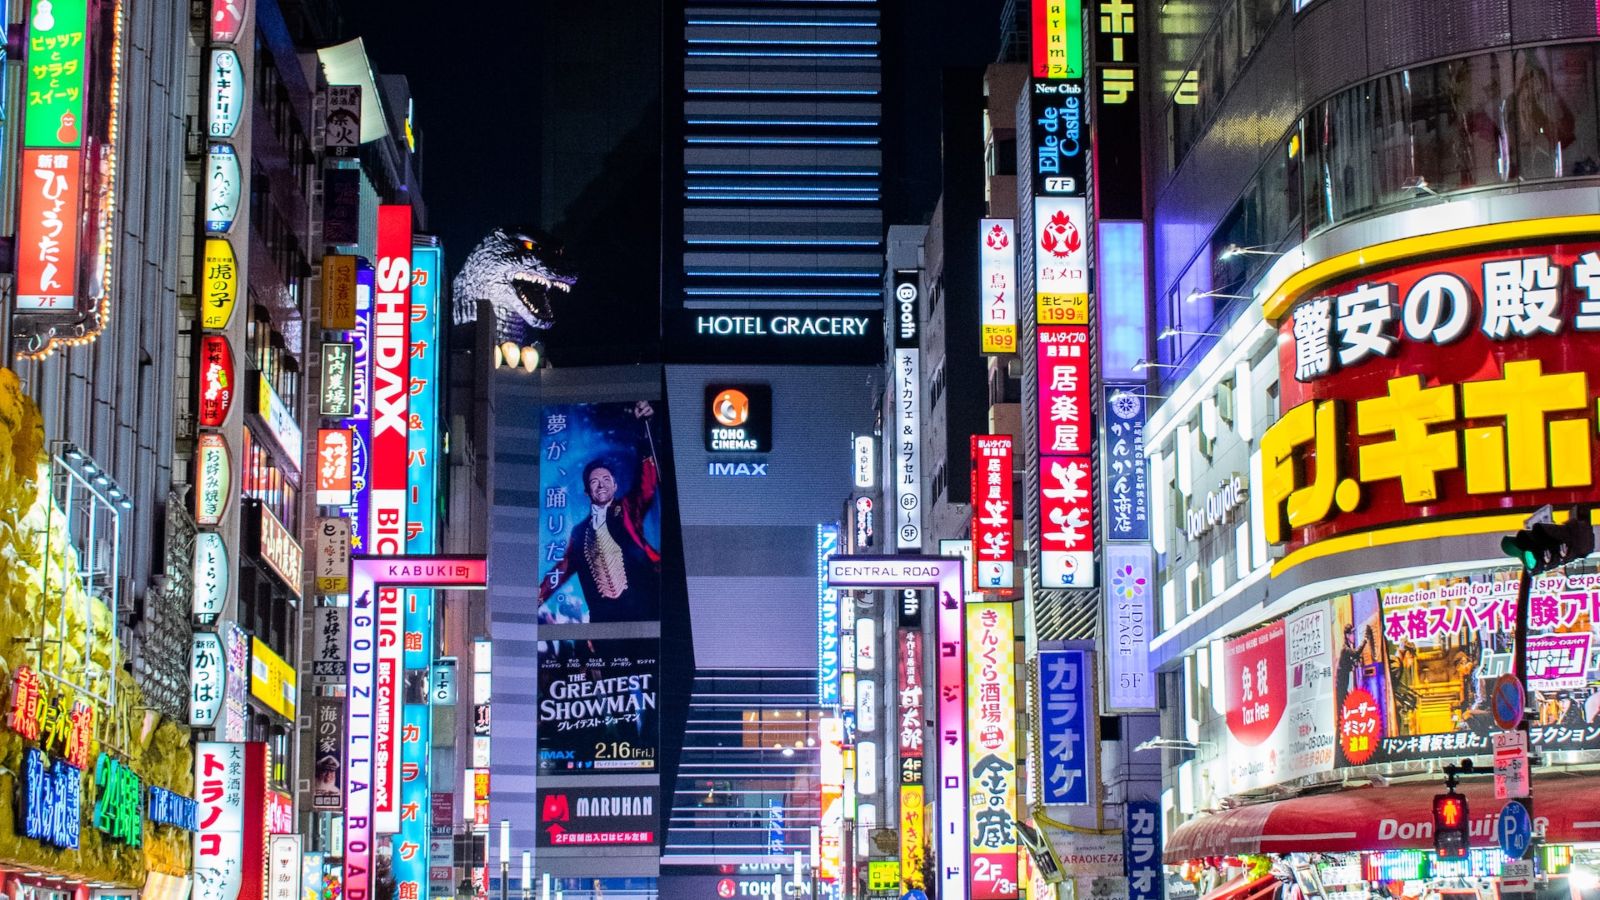 Hotel Gracery Shinjuku - Godzilla - Point Hacks